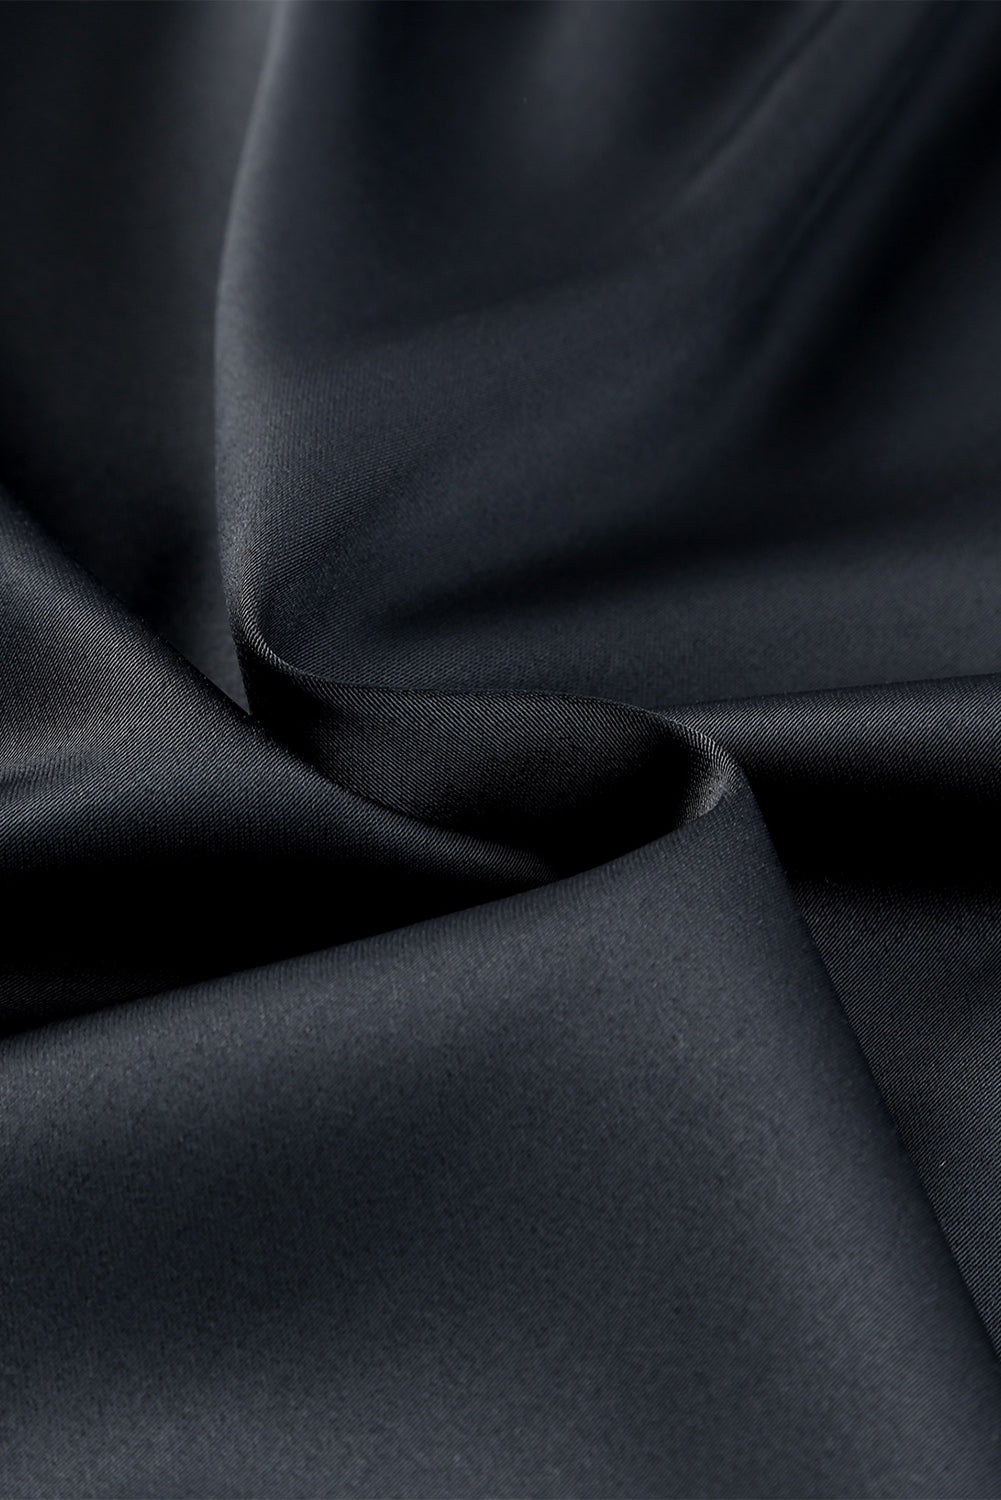 Black Sequin Splicing Pocket Buttoned Shirt Dress